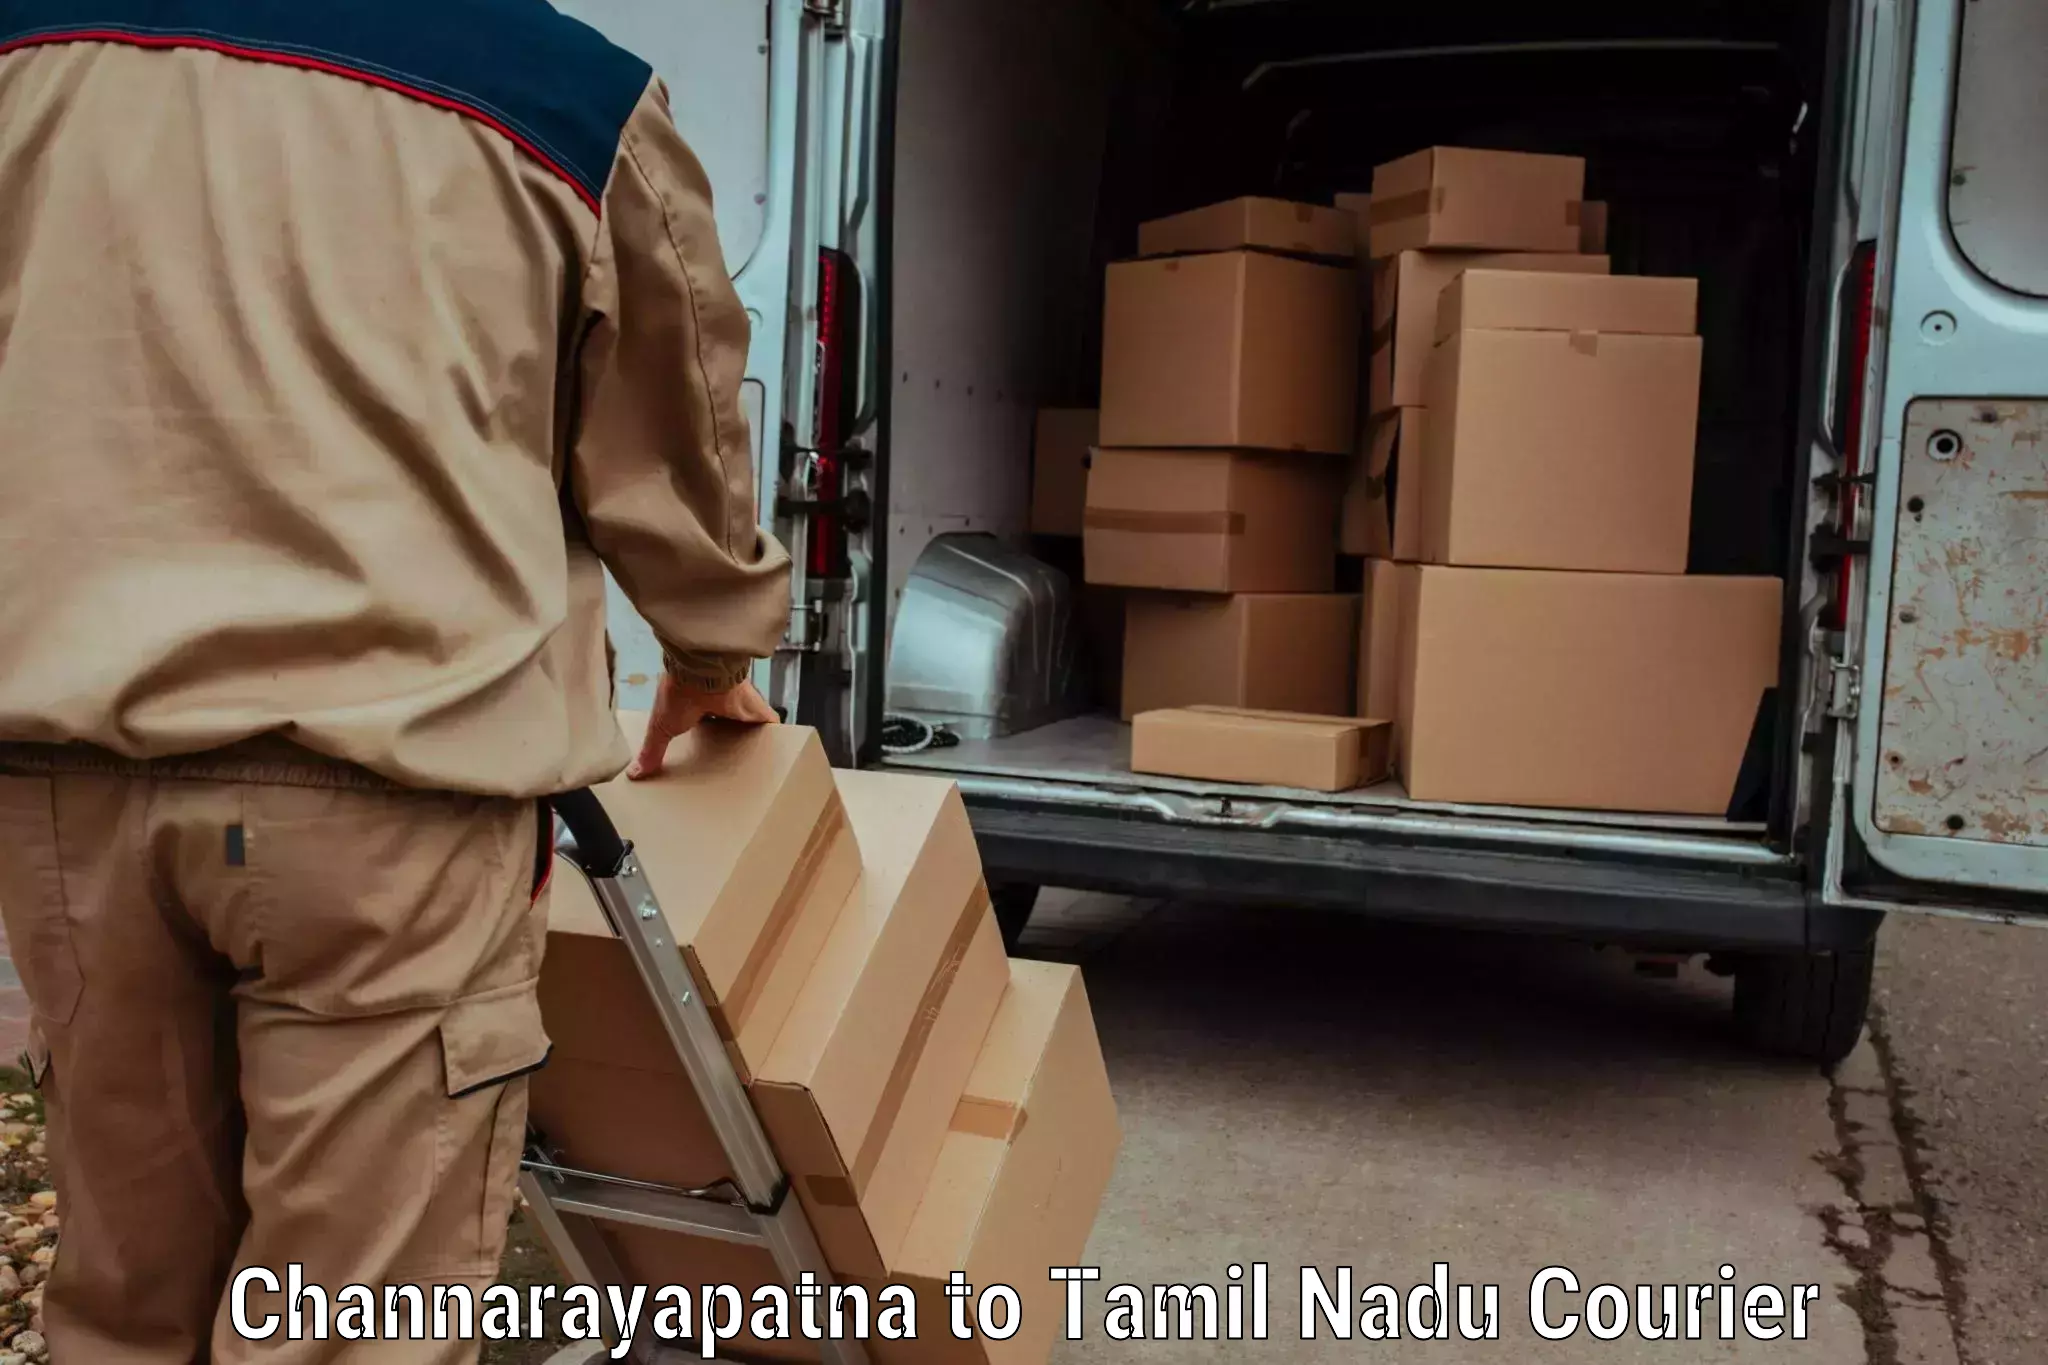 Multi-national courier services Channarayapatna to Sathyamangalam